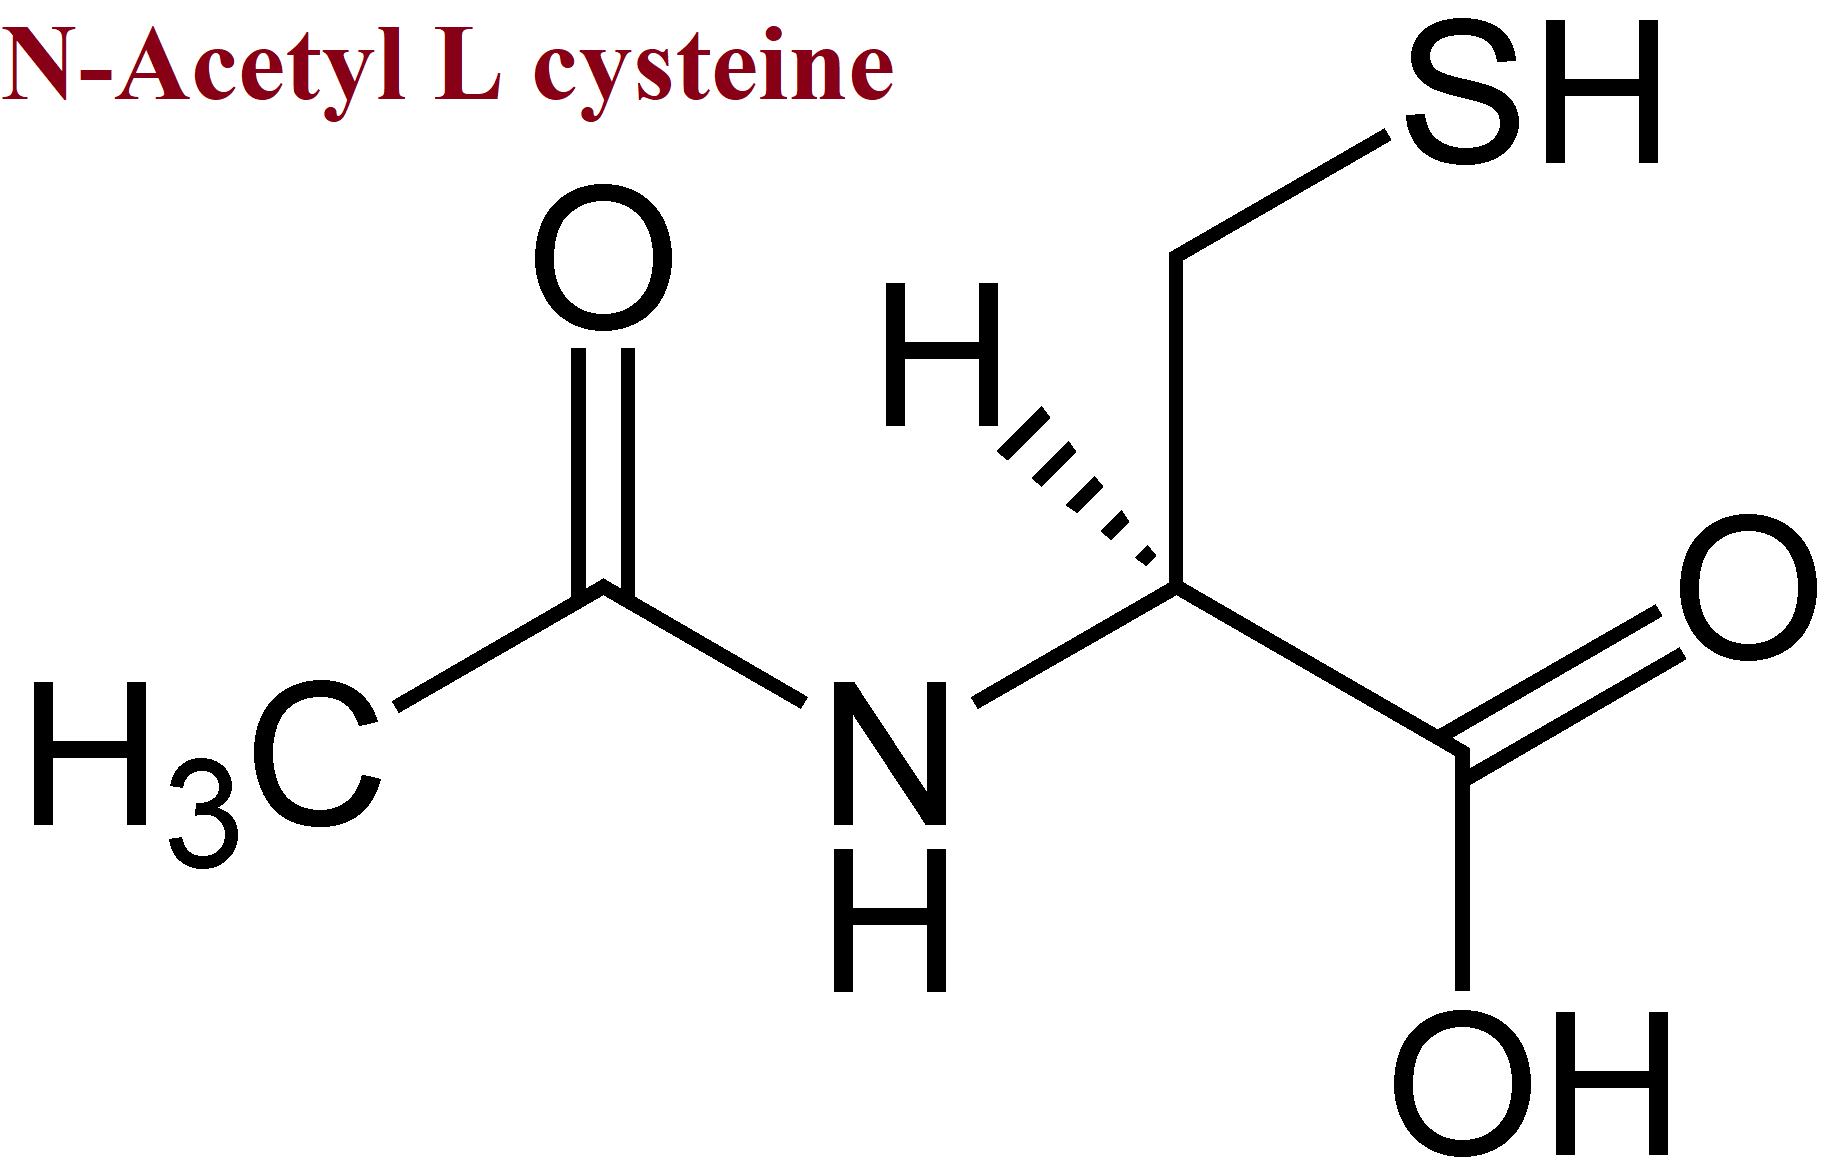 N-Acetyl L cysteine – Giúp điều trị lạc nội mạc tử cung